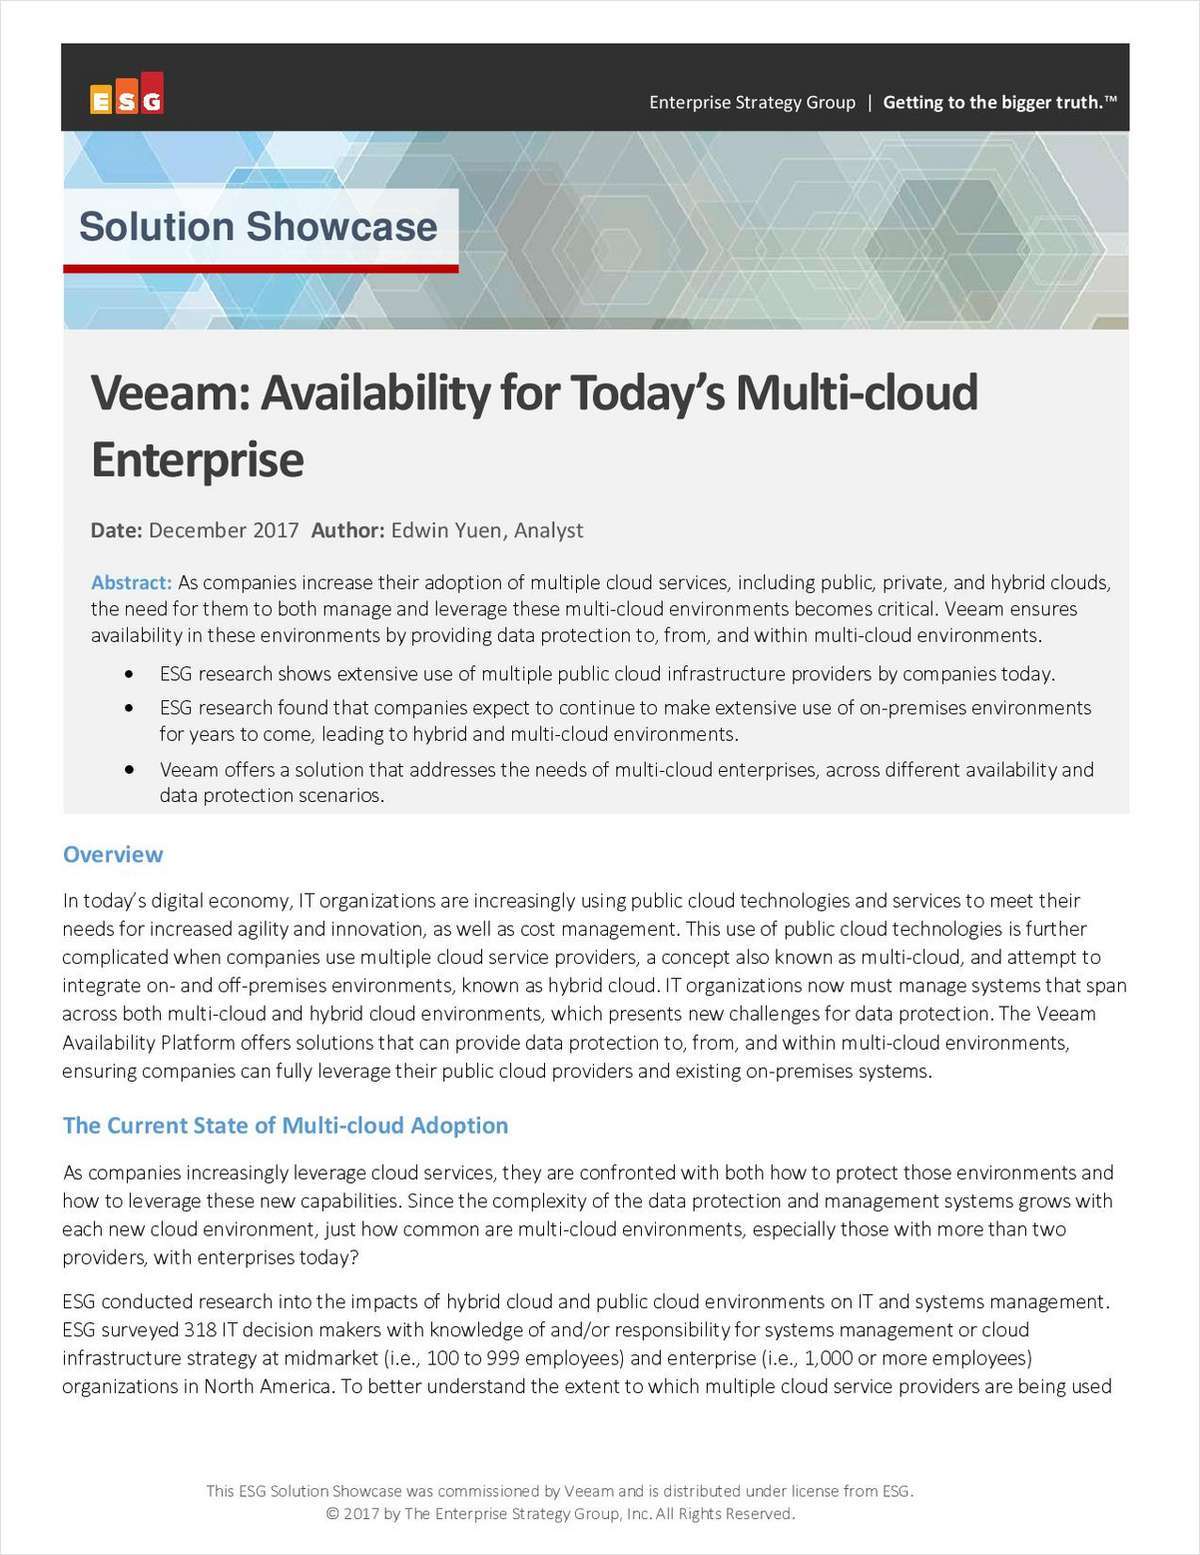 Veeam: Availability for Today's Multi-cloud Enterprise